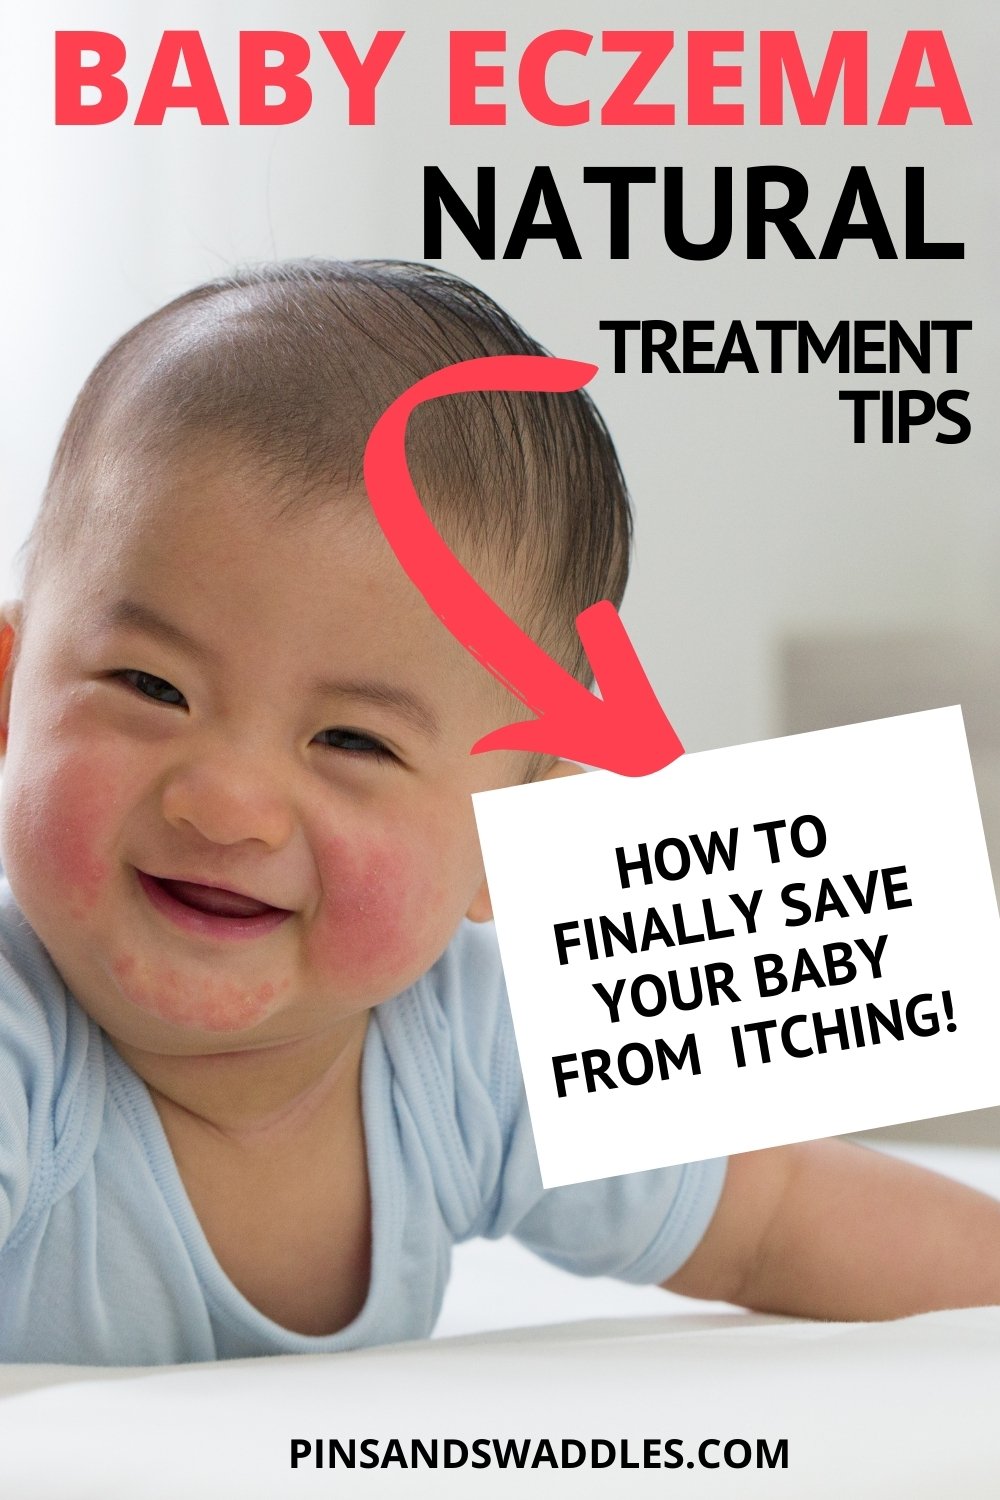 12 Proven Tips to Treat Baby Eczema Naturally